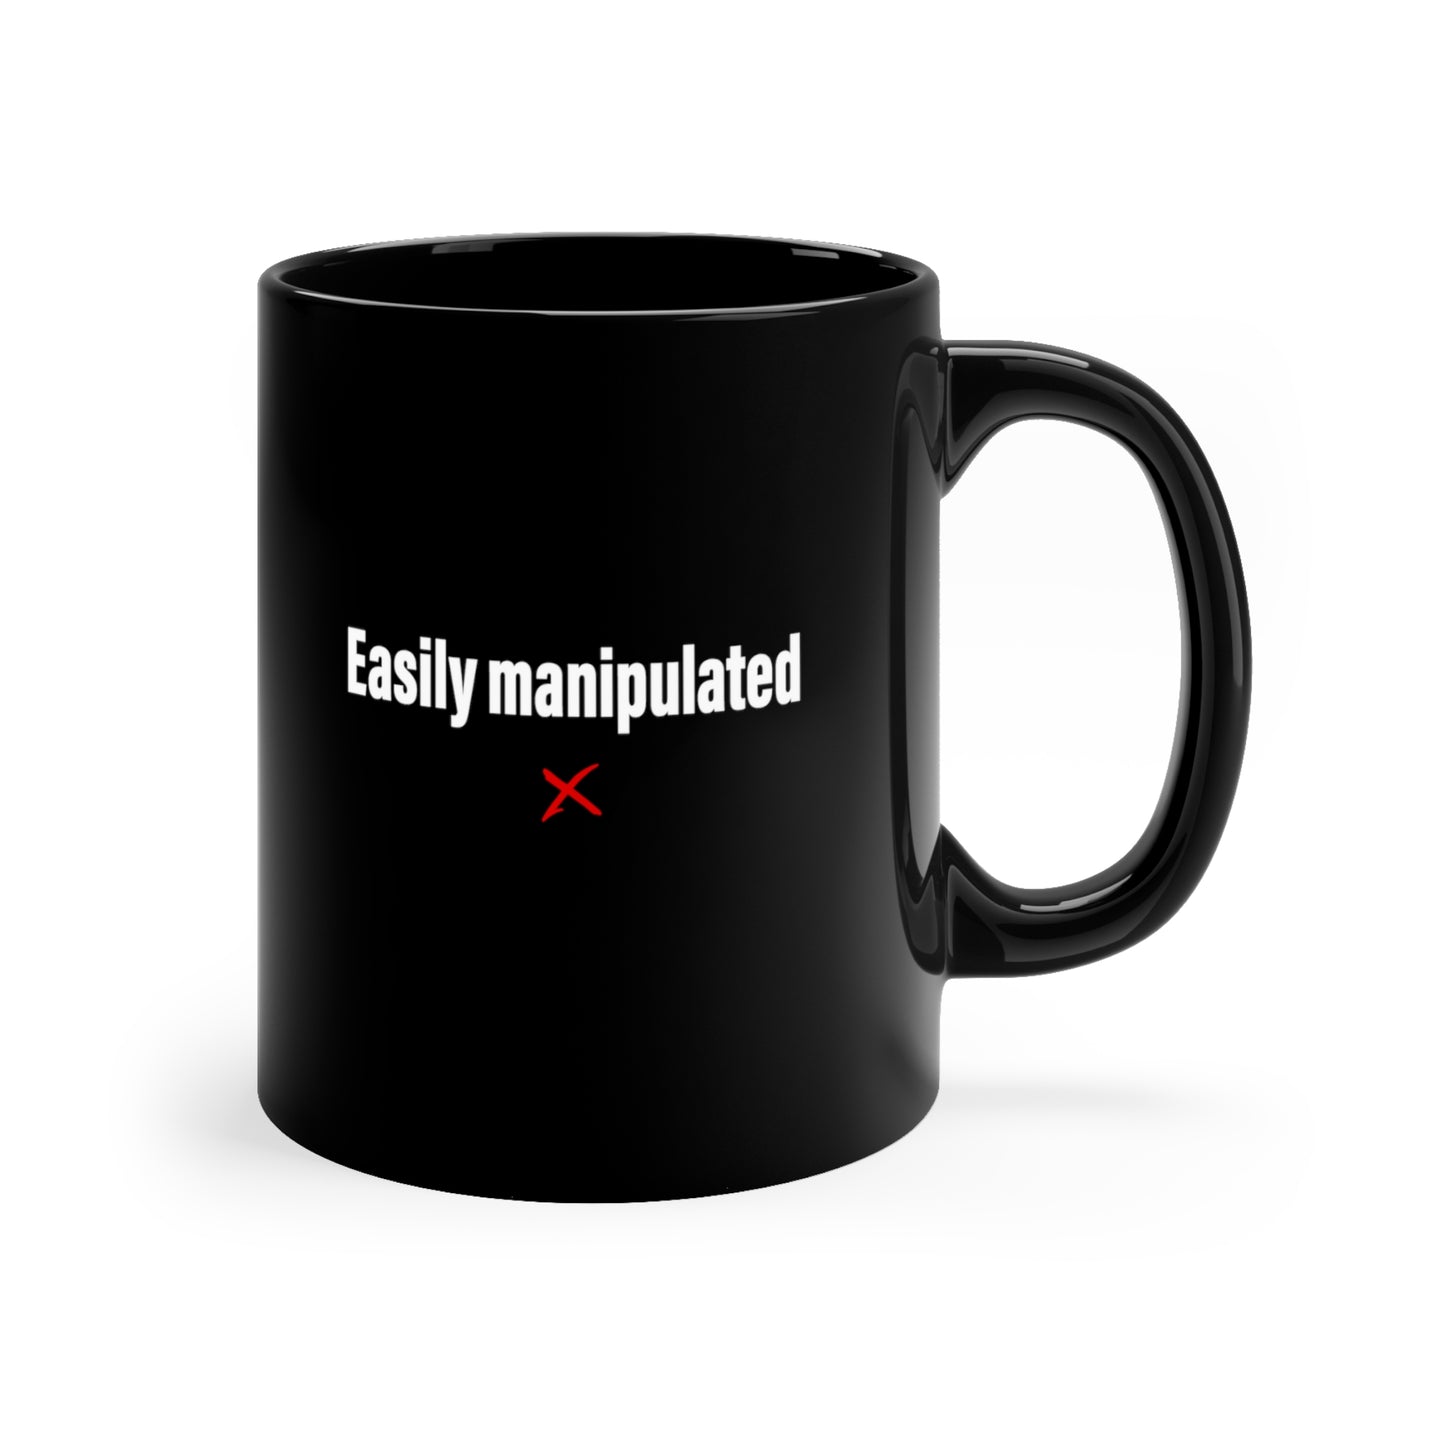 Easily manipulated - Mug